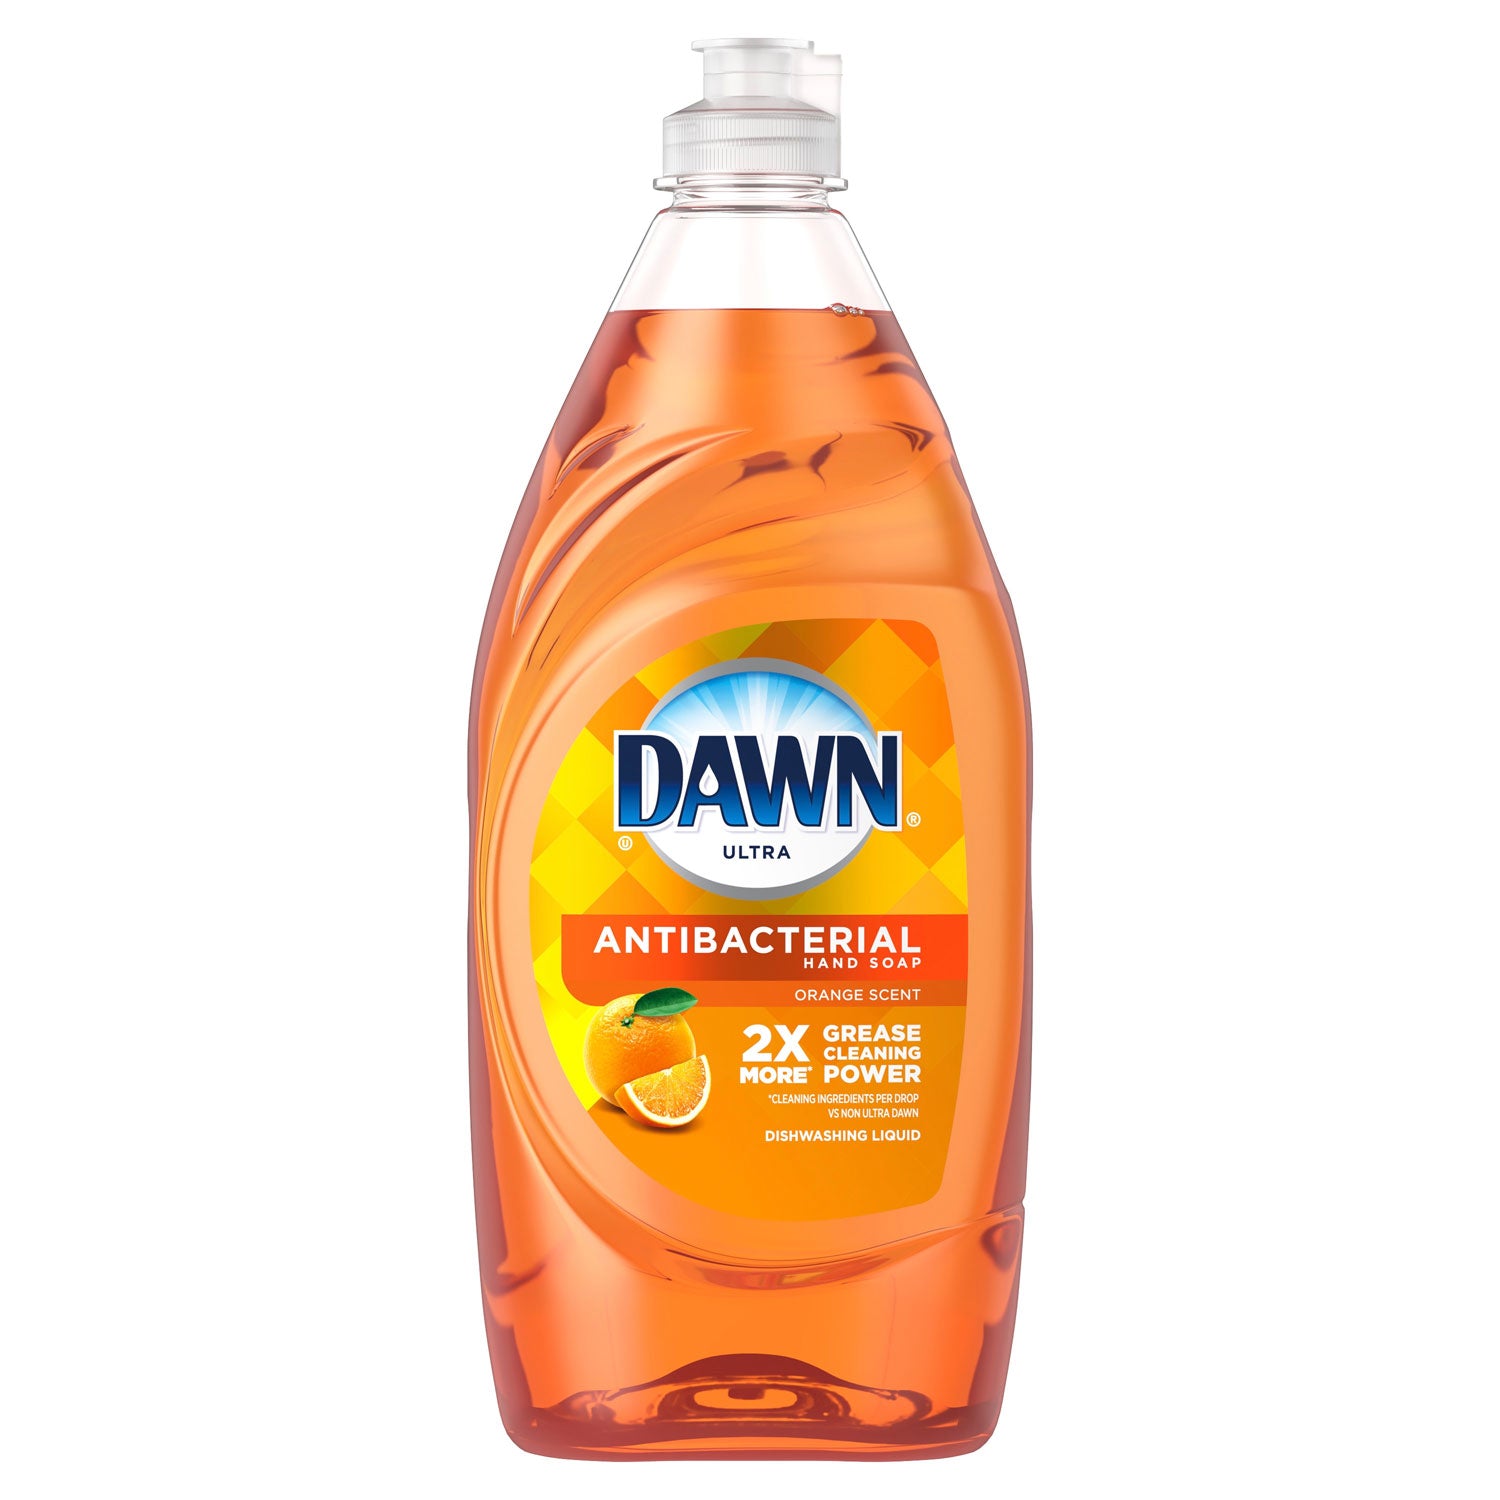 ultra-antibacterial-dishwashing-liquid-orange-scent-28-oz-bottle-8-carton_pgc97318 - 1